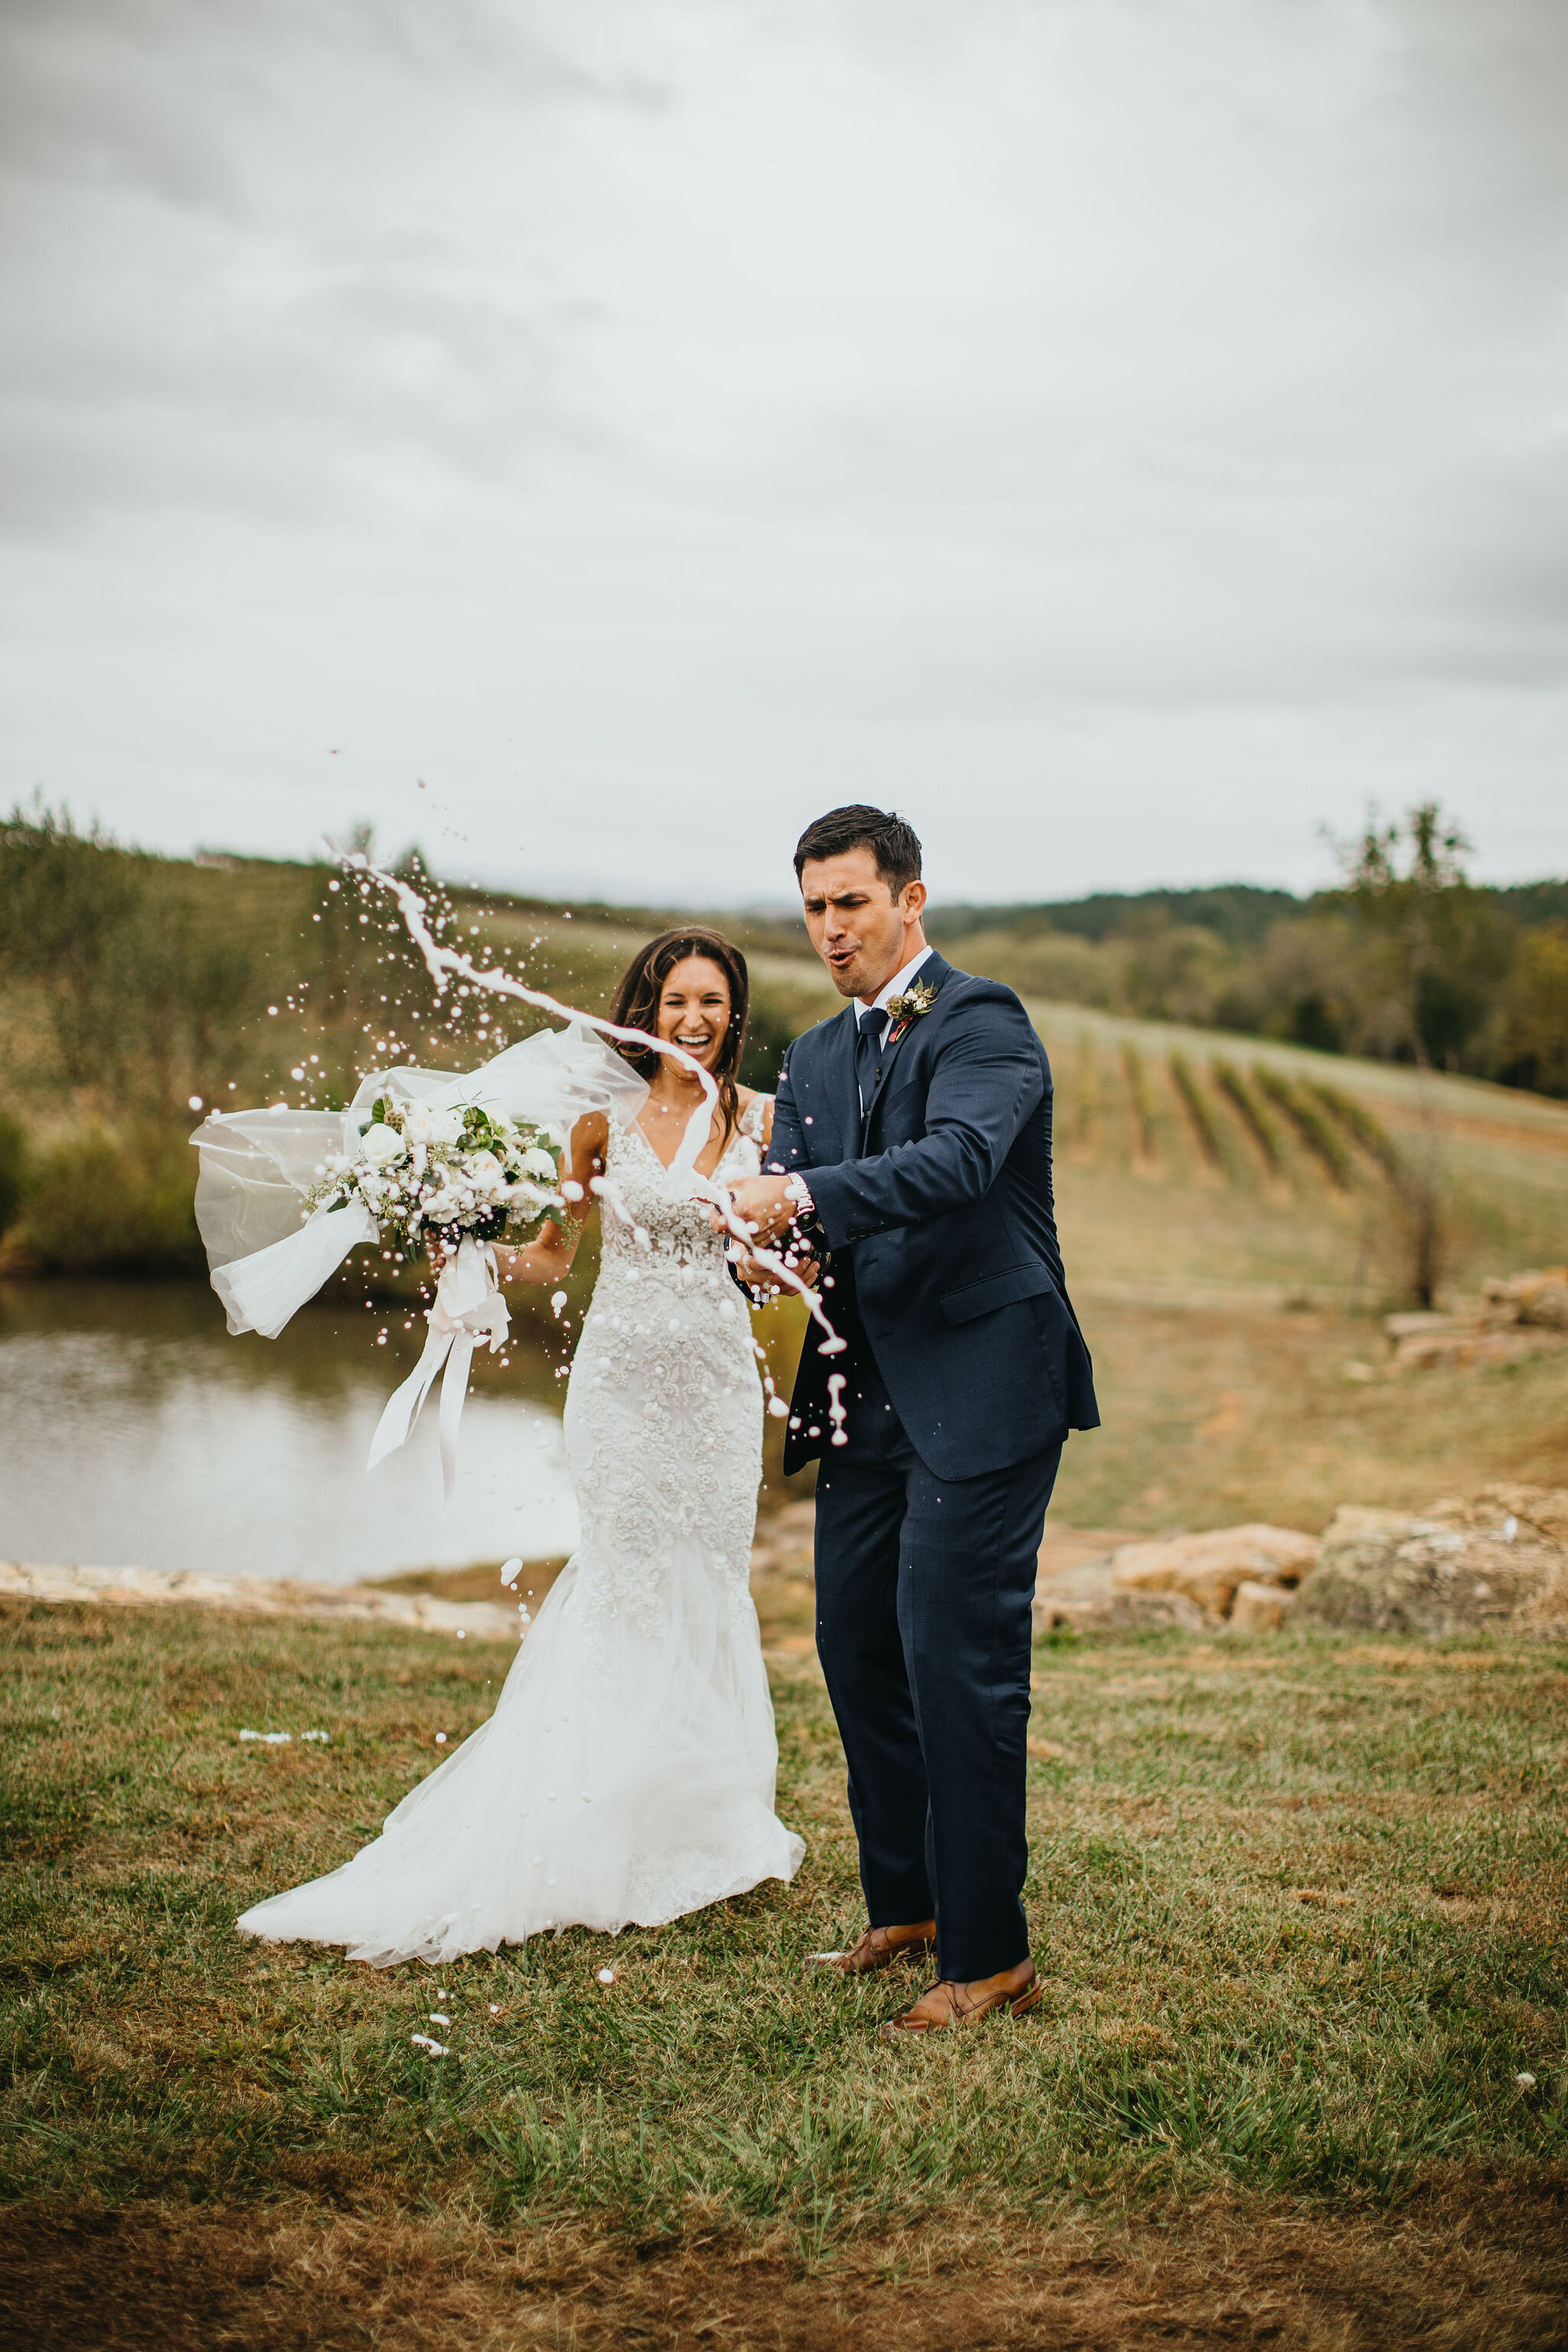 Virginia Wedding Photo/Video Services by Christina &amp; Jeremiah